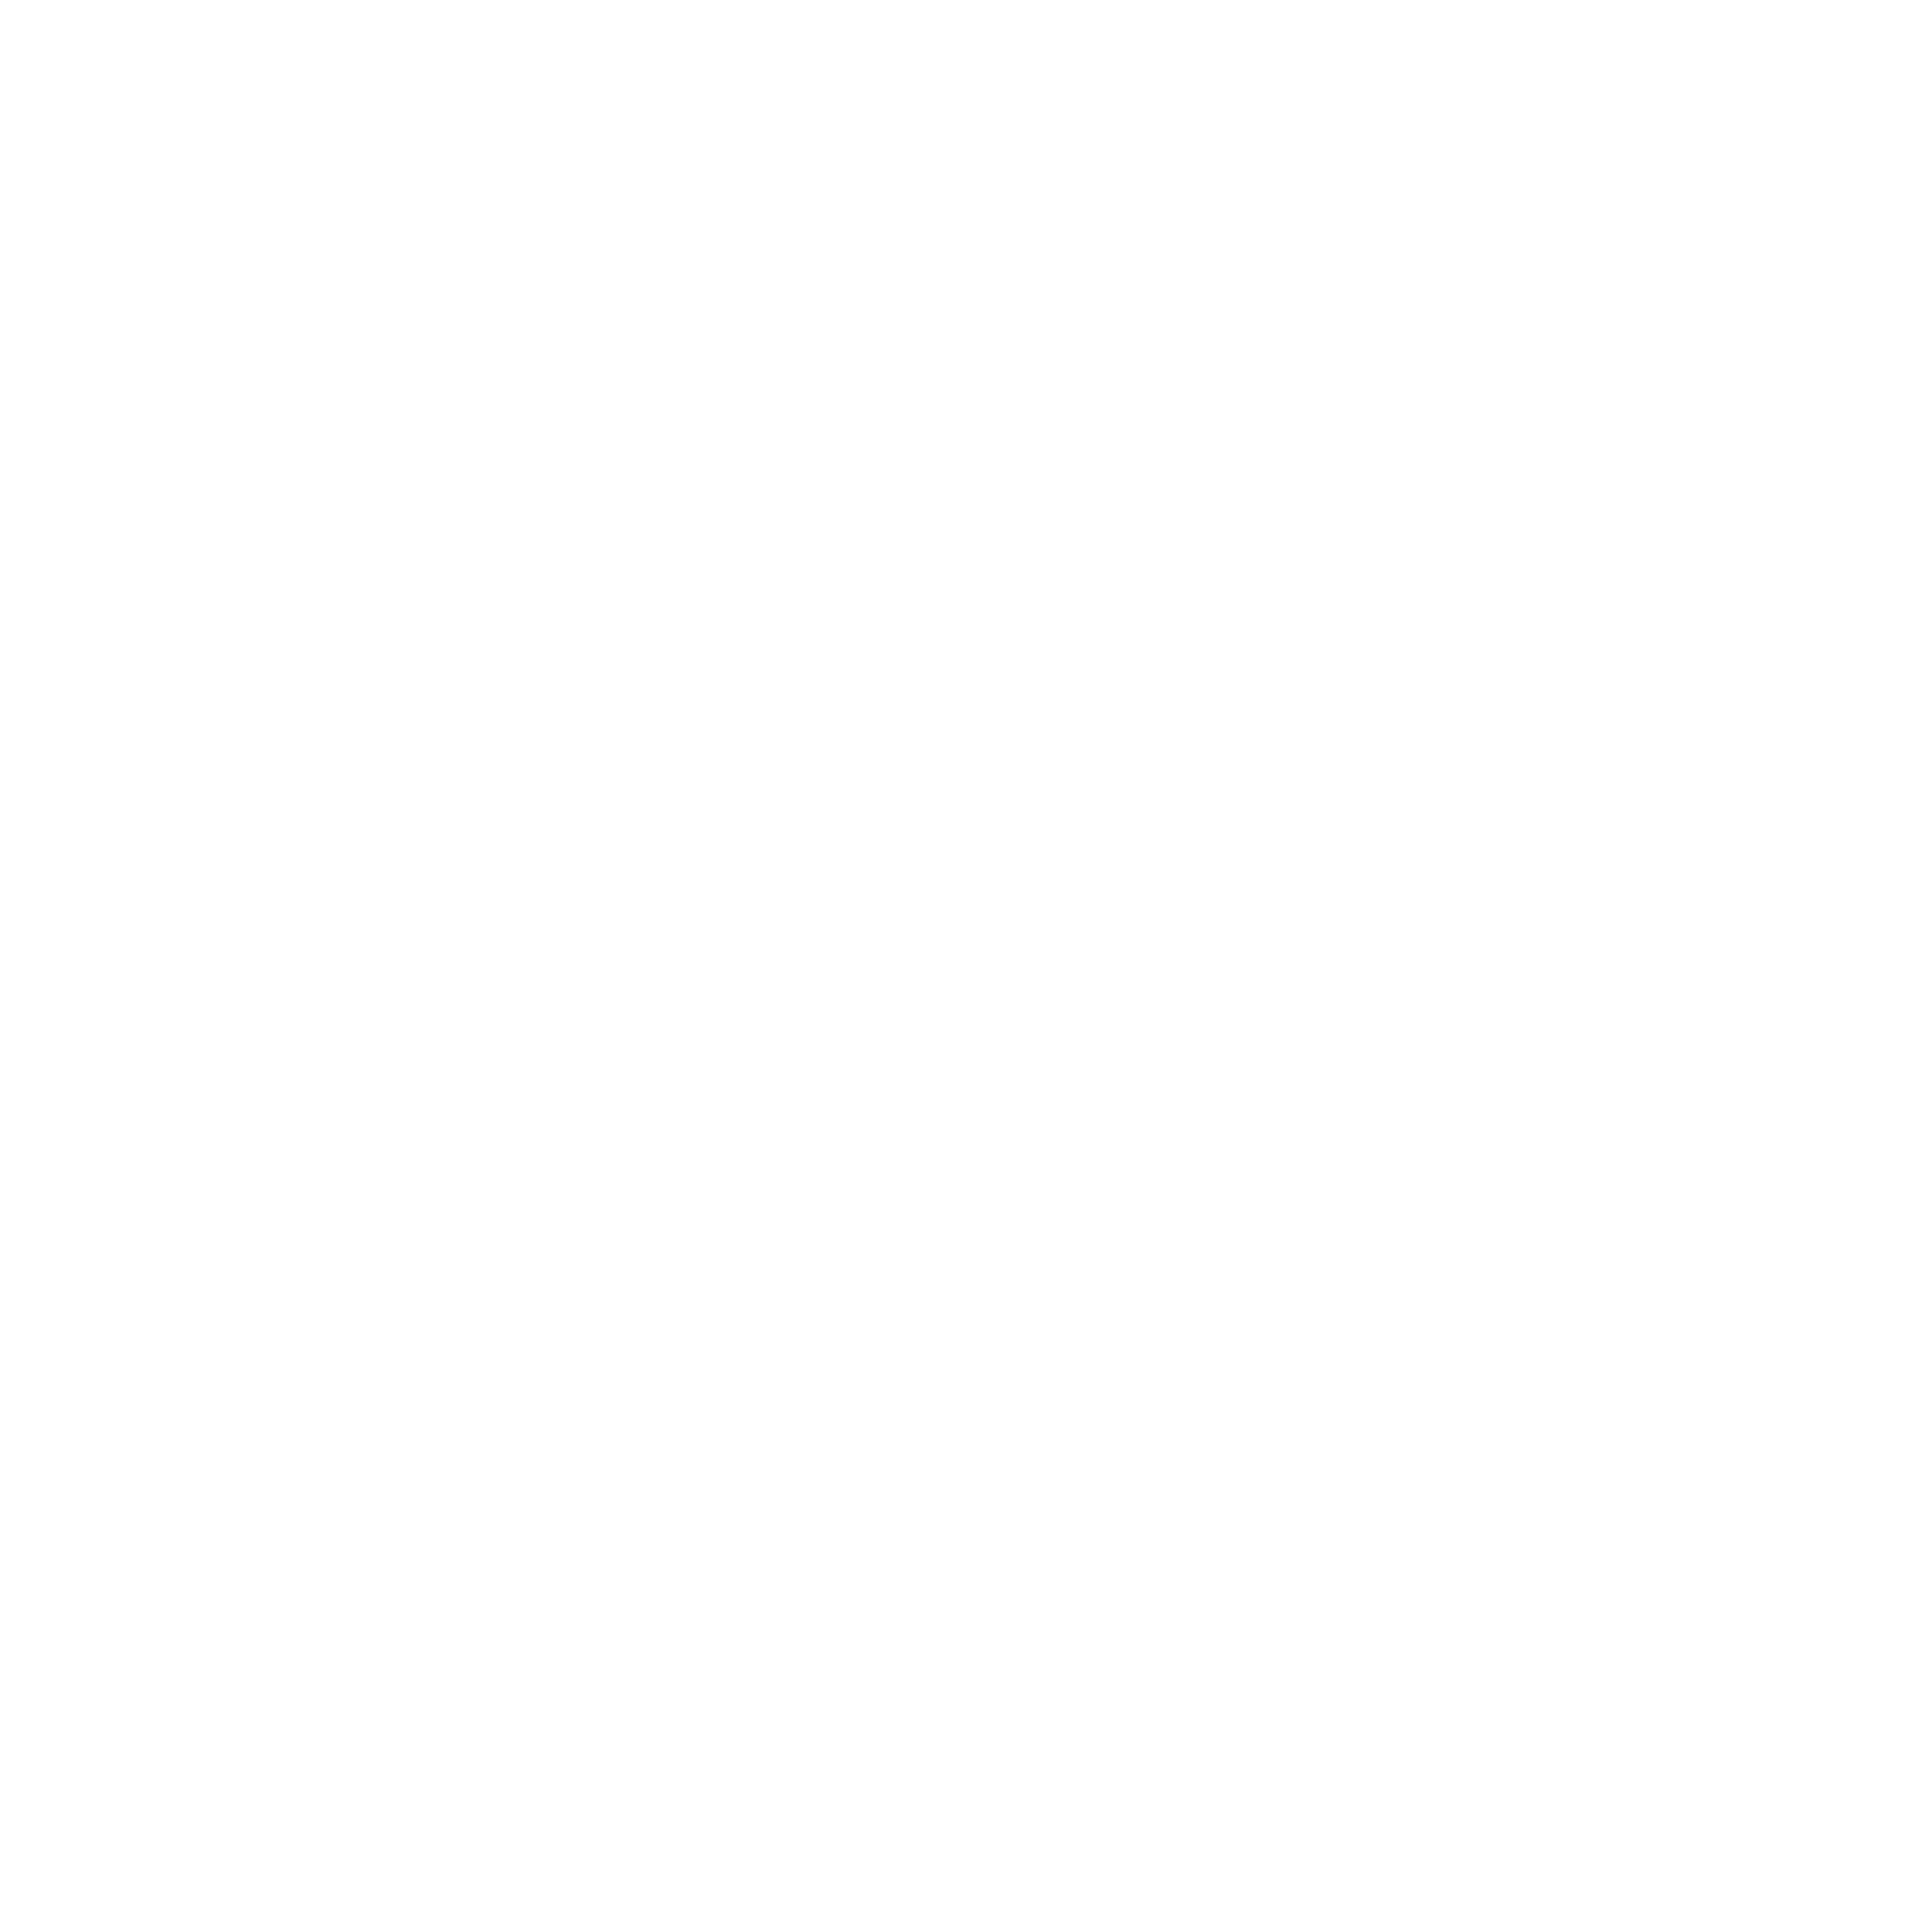 Photo of Public Notary Symbol